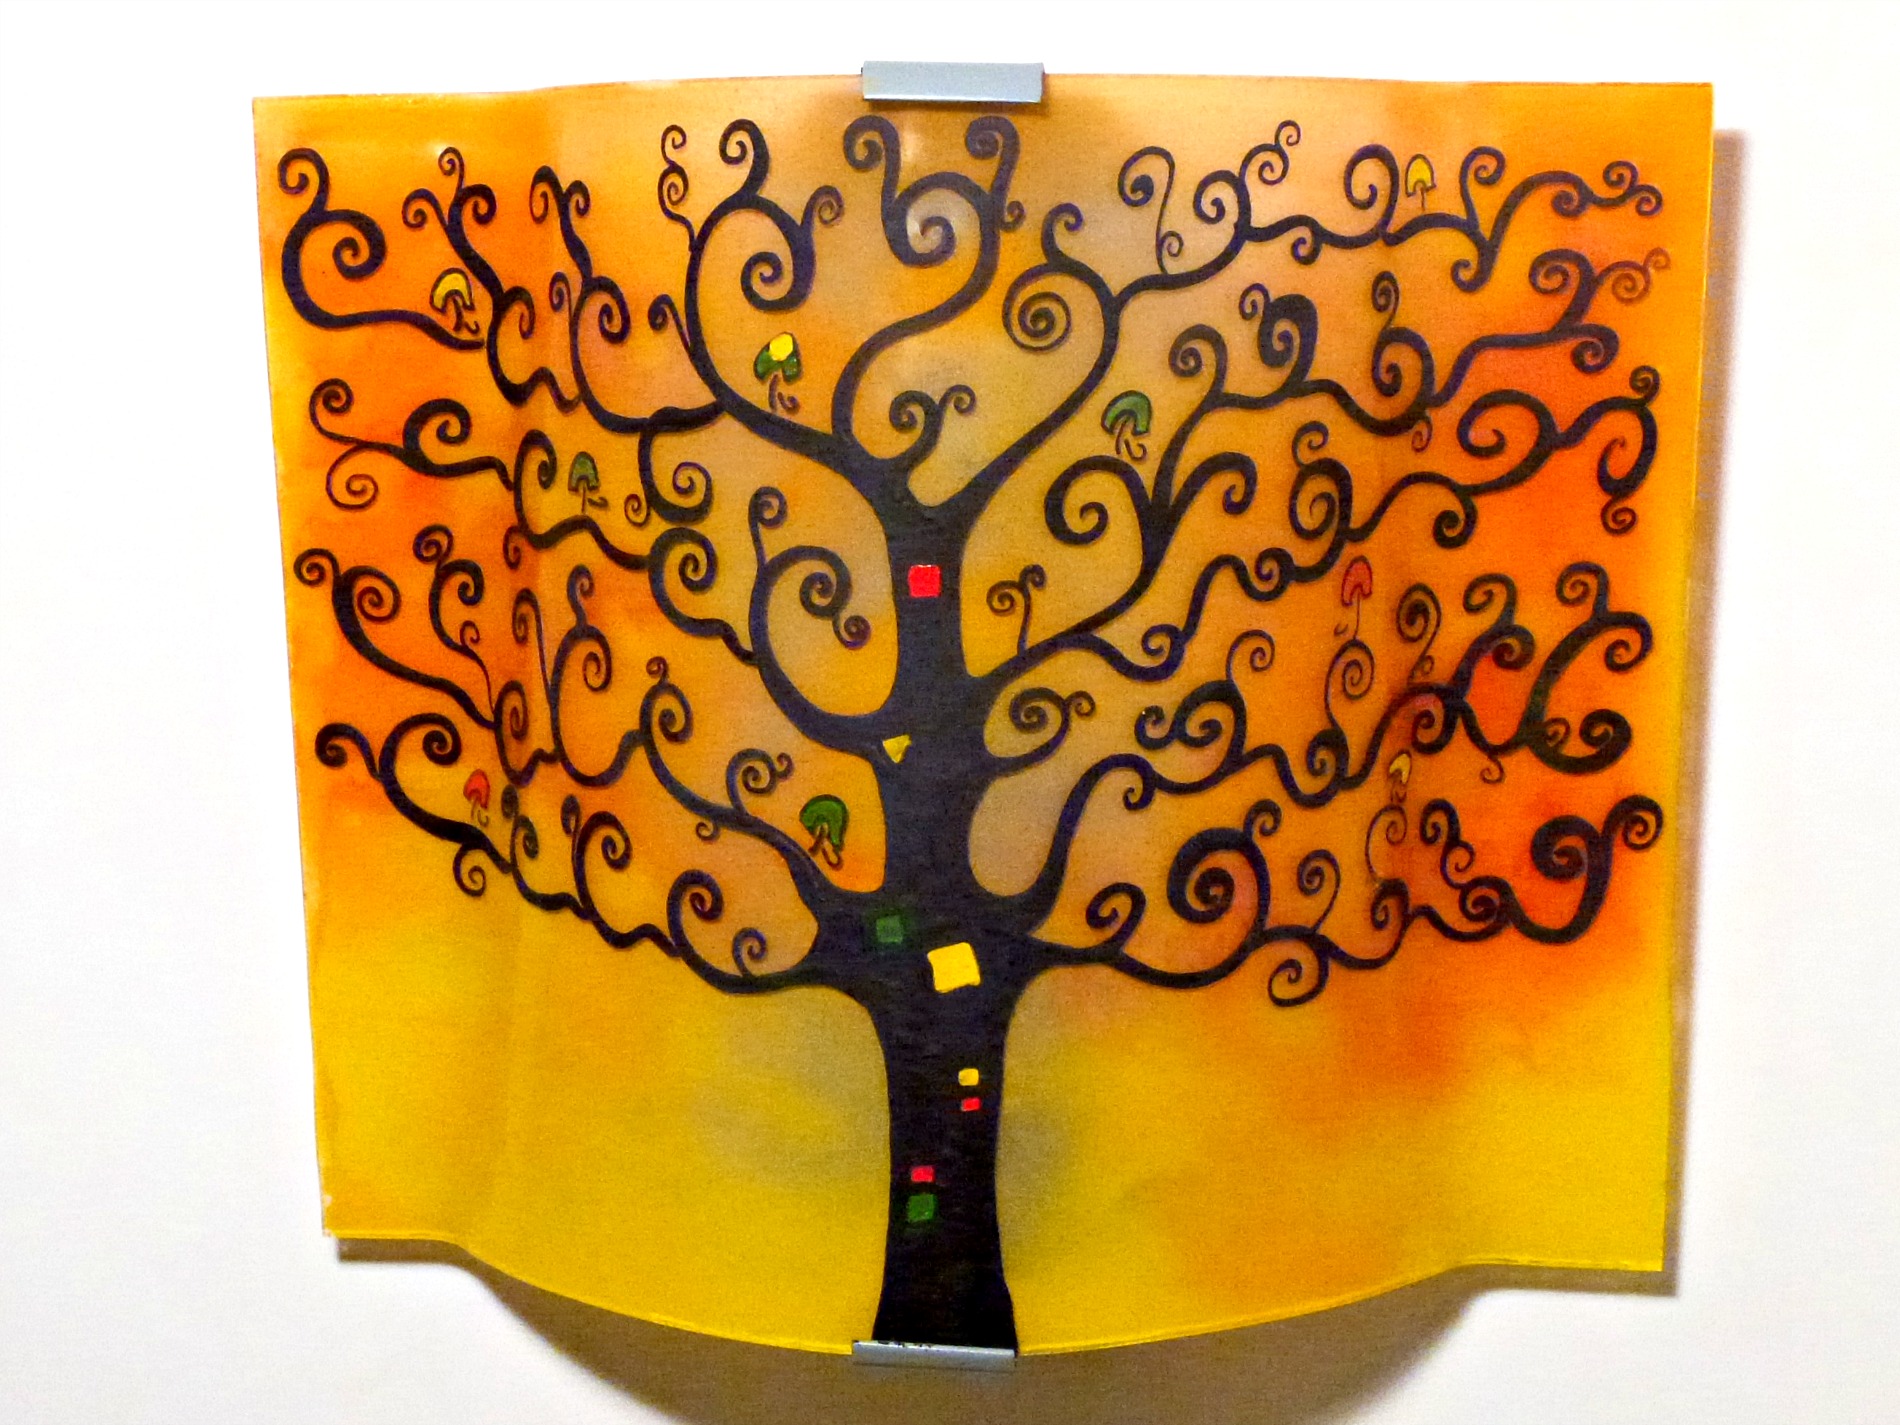 Applique murale artisanale motif arbre de vie jaune et orange